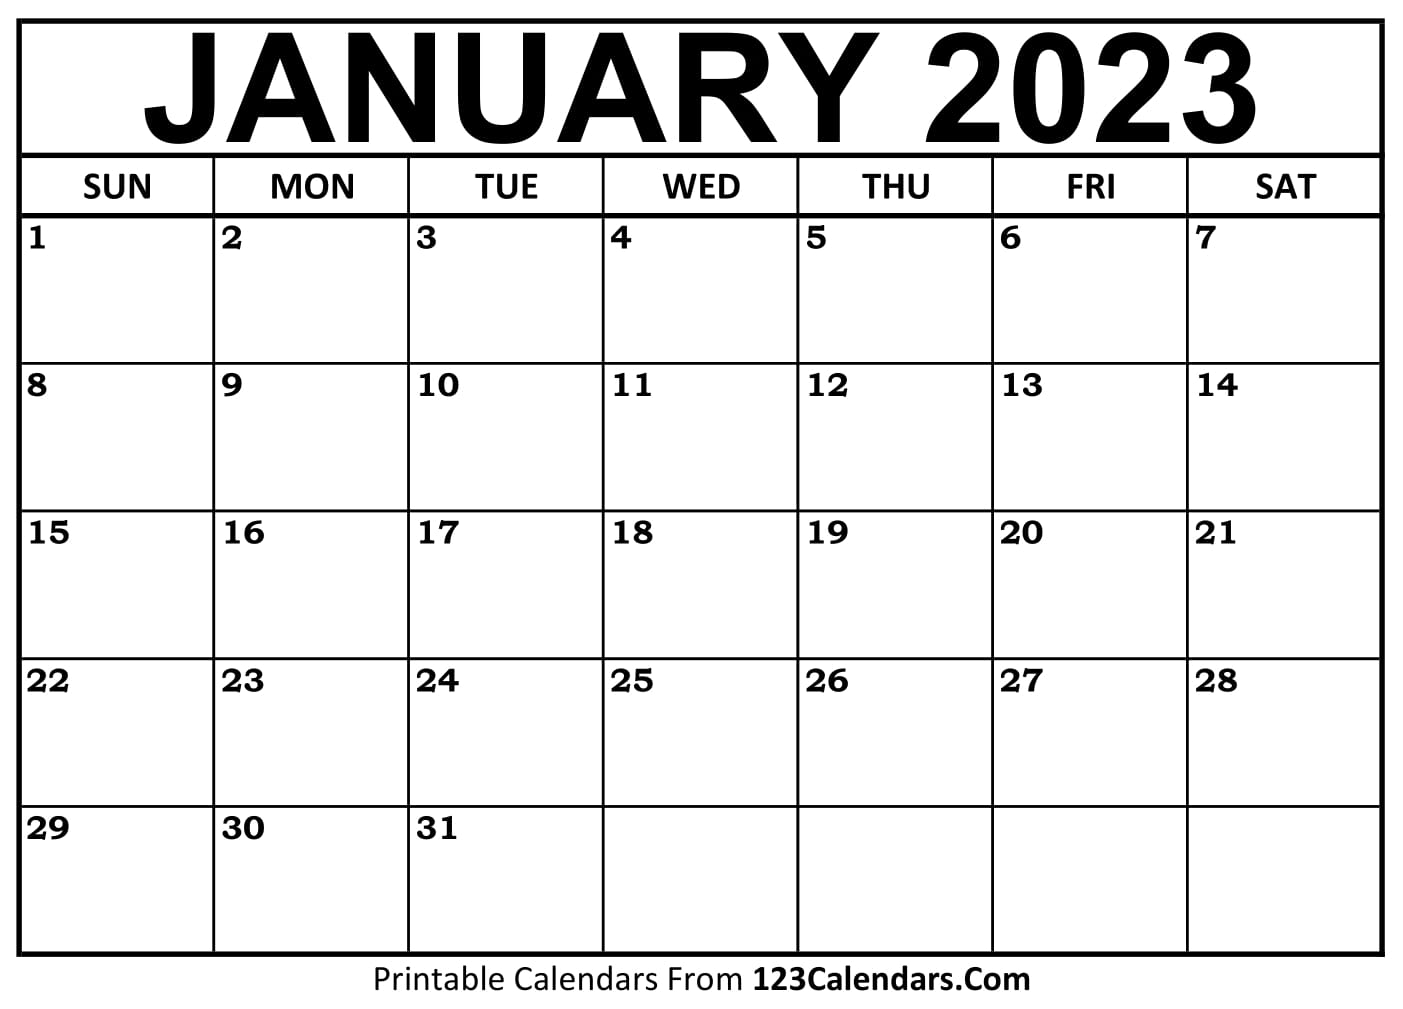 free-2023-calendar-with-holidays-ambassade-mauritanie-rabat-net-vrogue